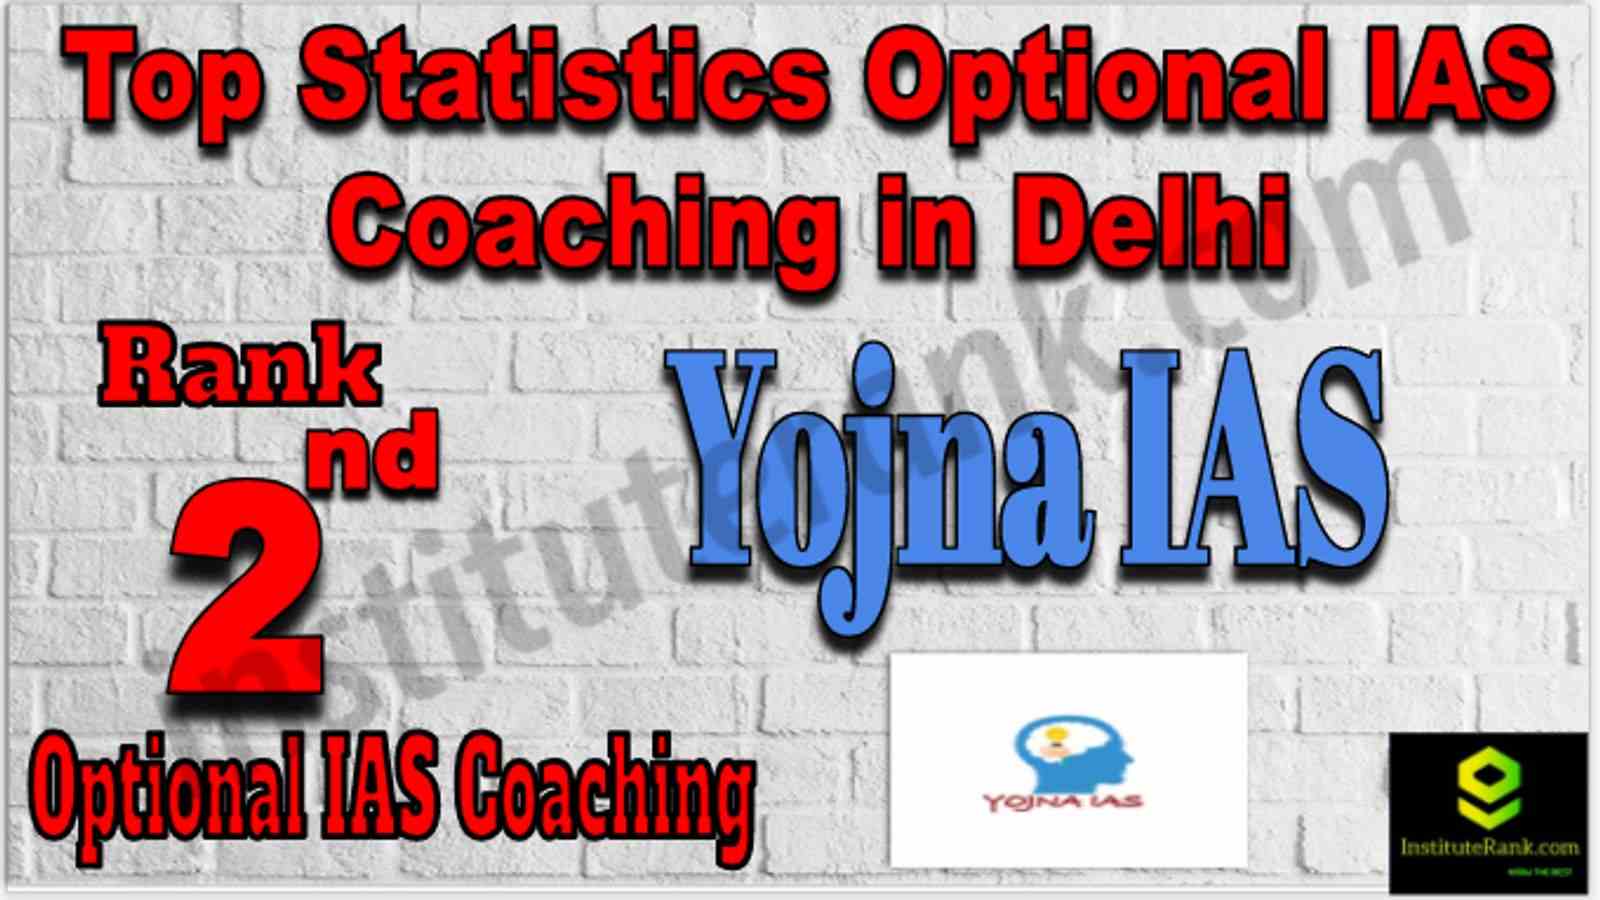 Rank 2 Top Statistics Optional IAS Coaching in Delhi